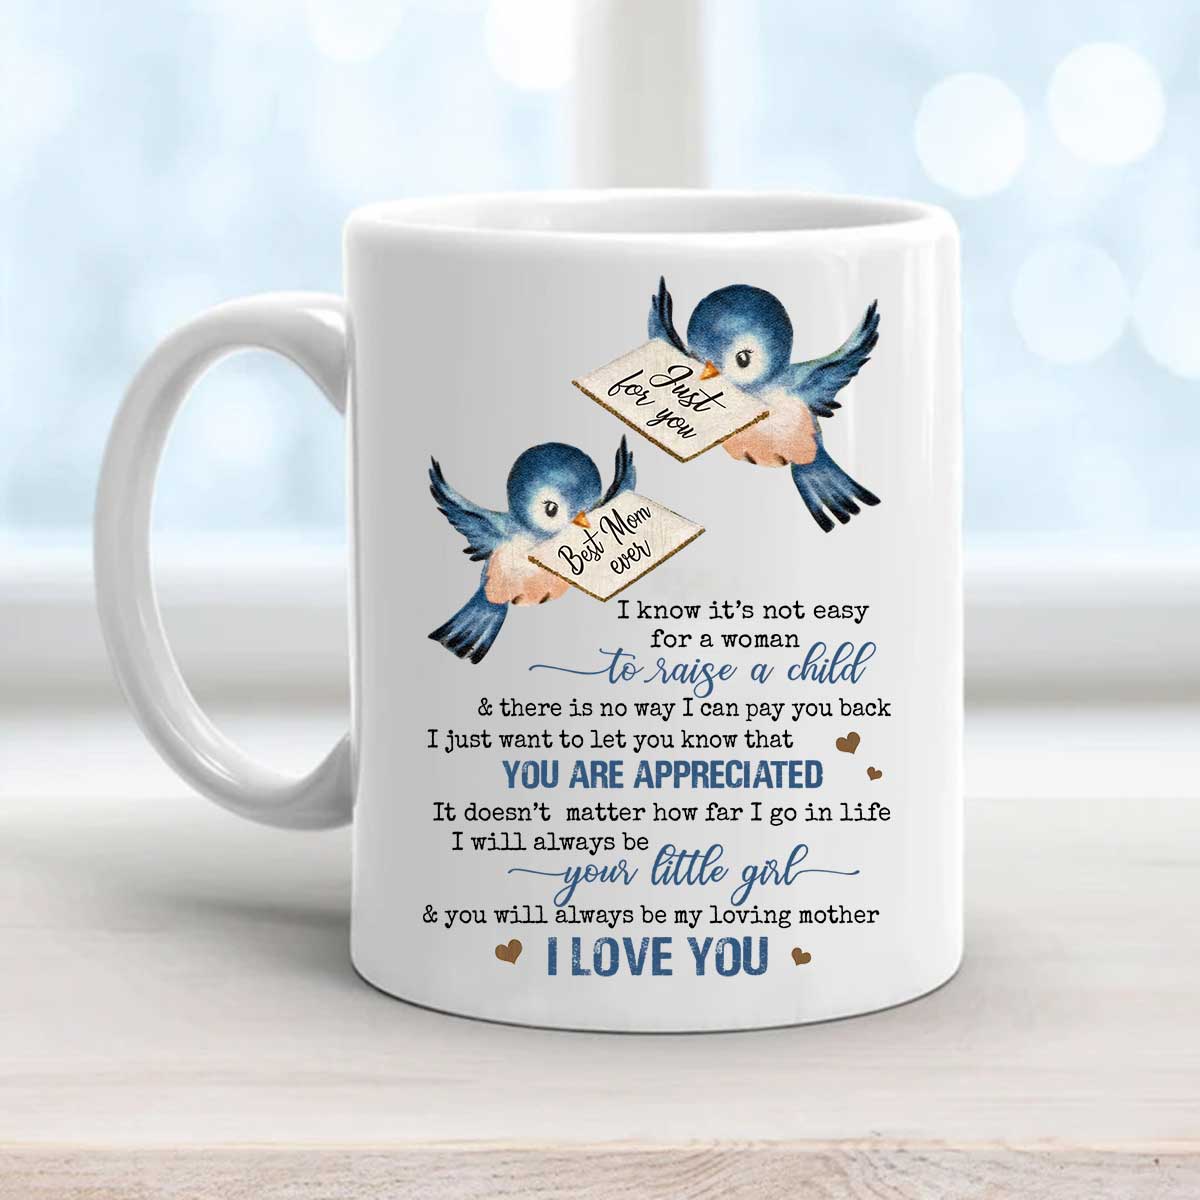 Gift For Mom Mug - Daughter to mom, Blue bird Mug - Gift For Mother's Day, Presents for Mom, Anniversary - I will always be you little girl Mug